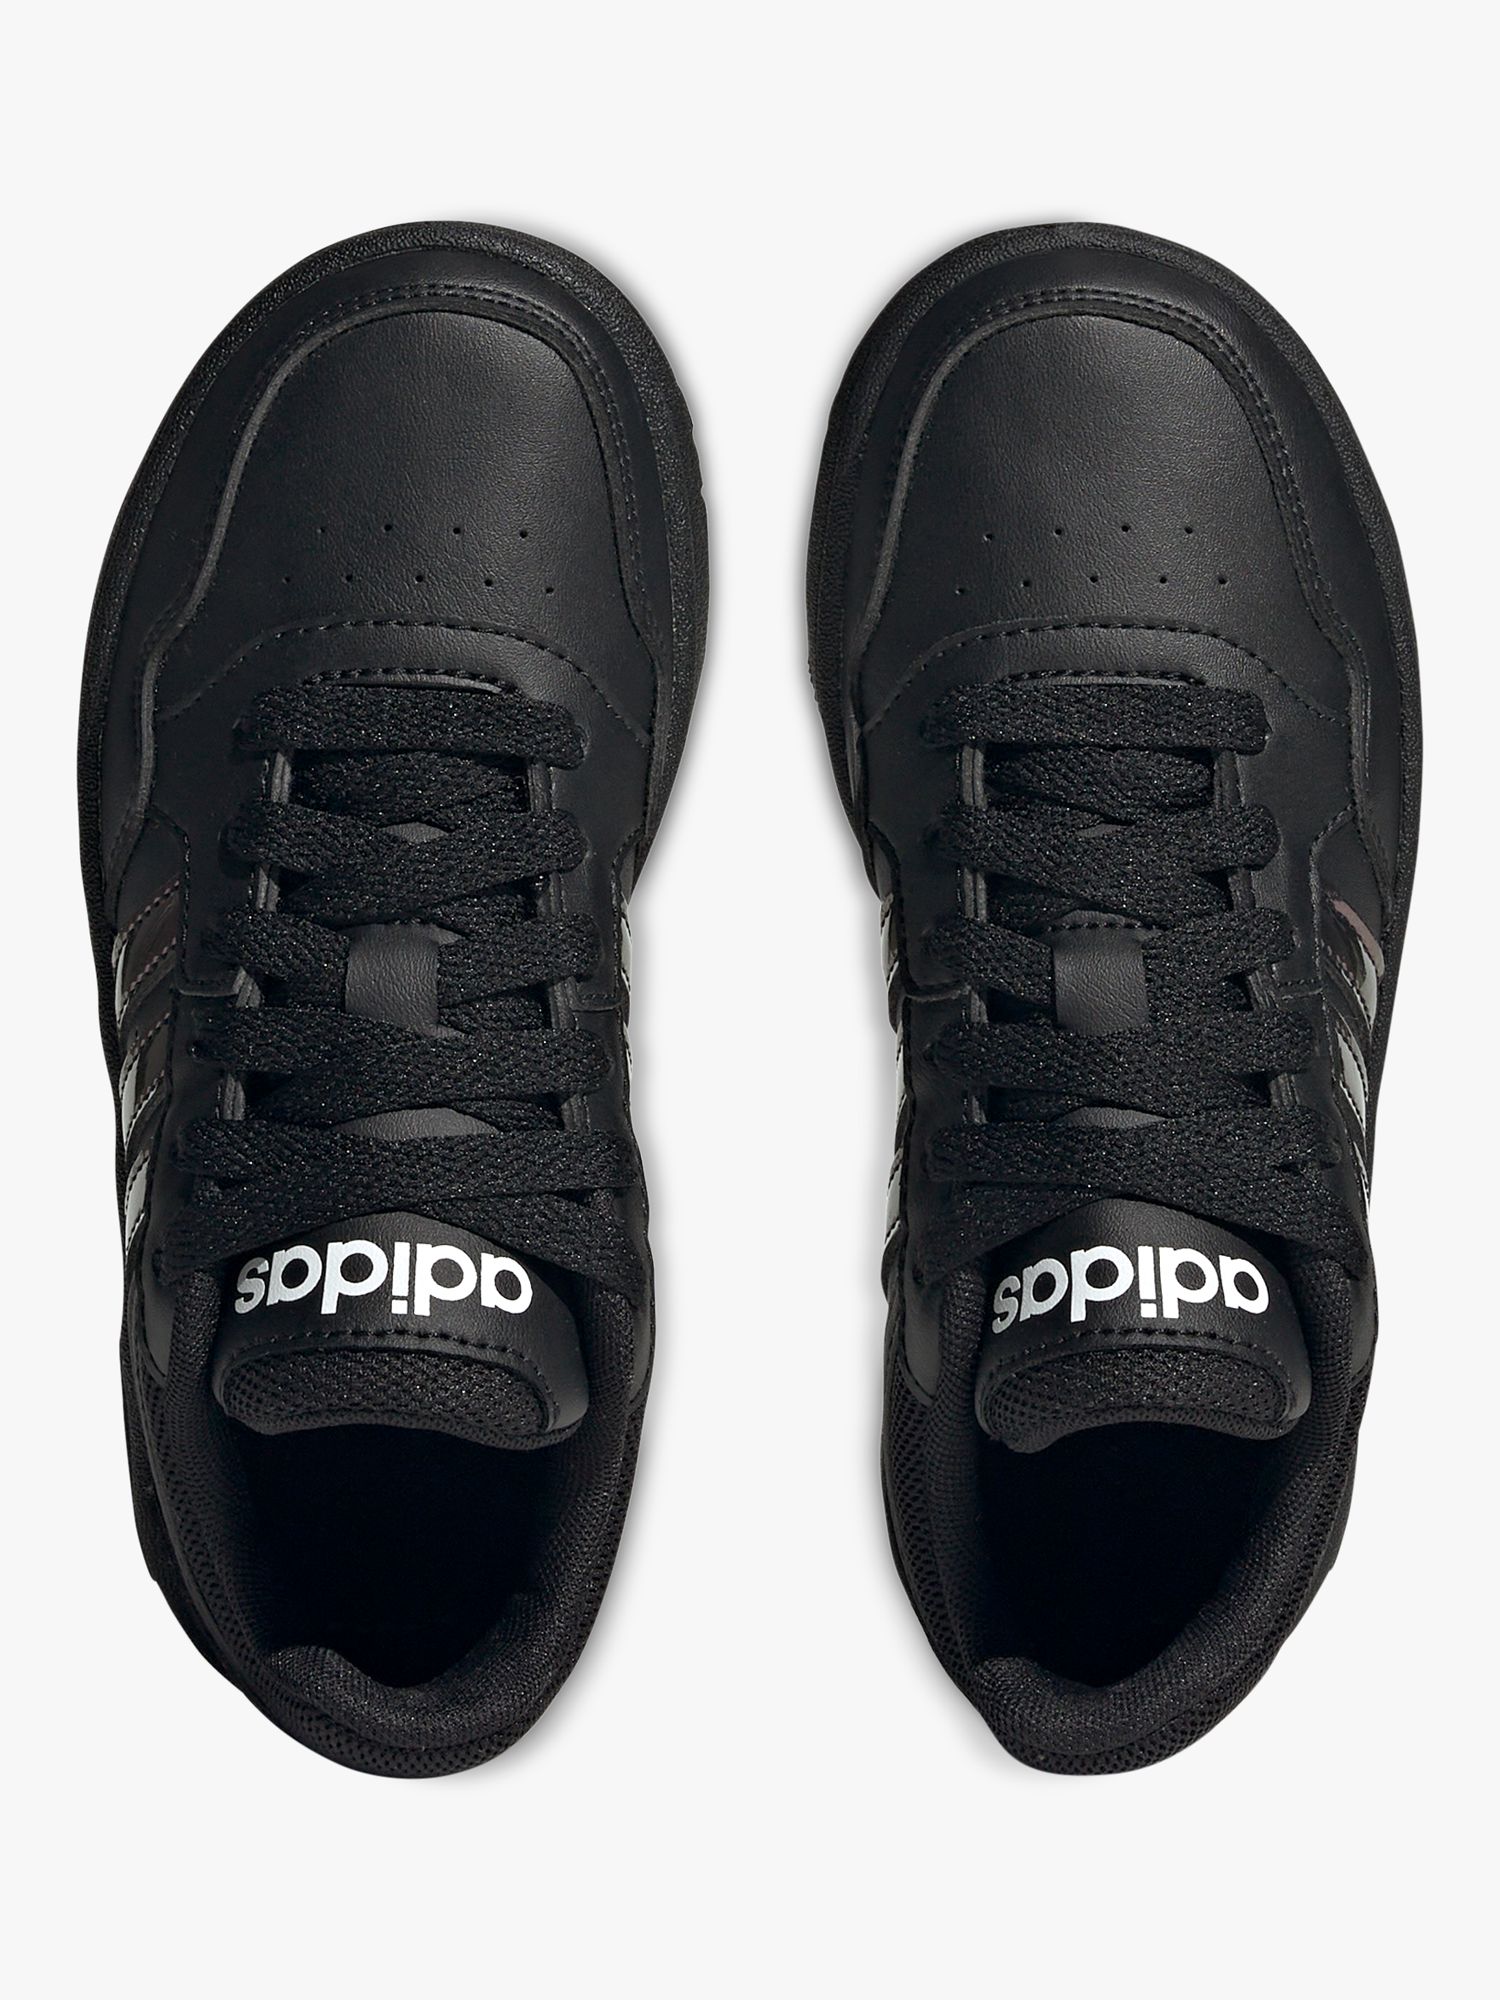 adidas Kids' Hoops Trainers, Core Black/Core Black/Cloud White, 3